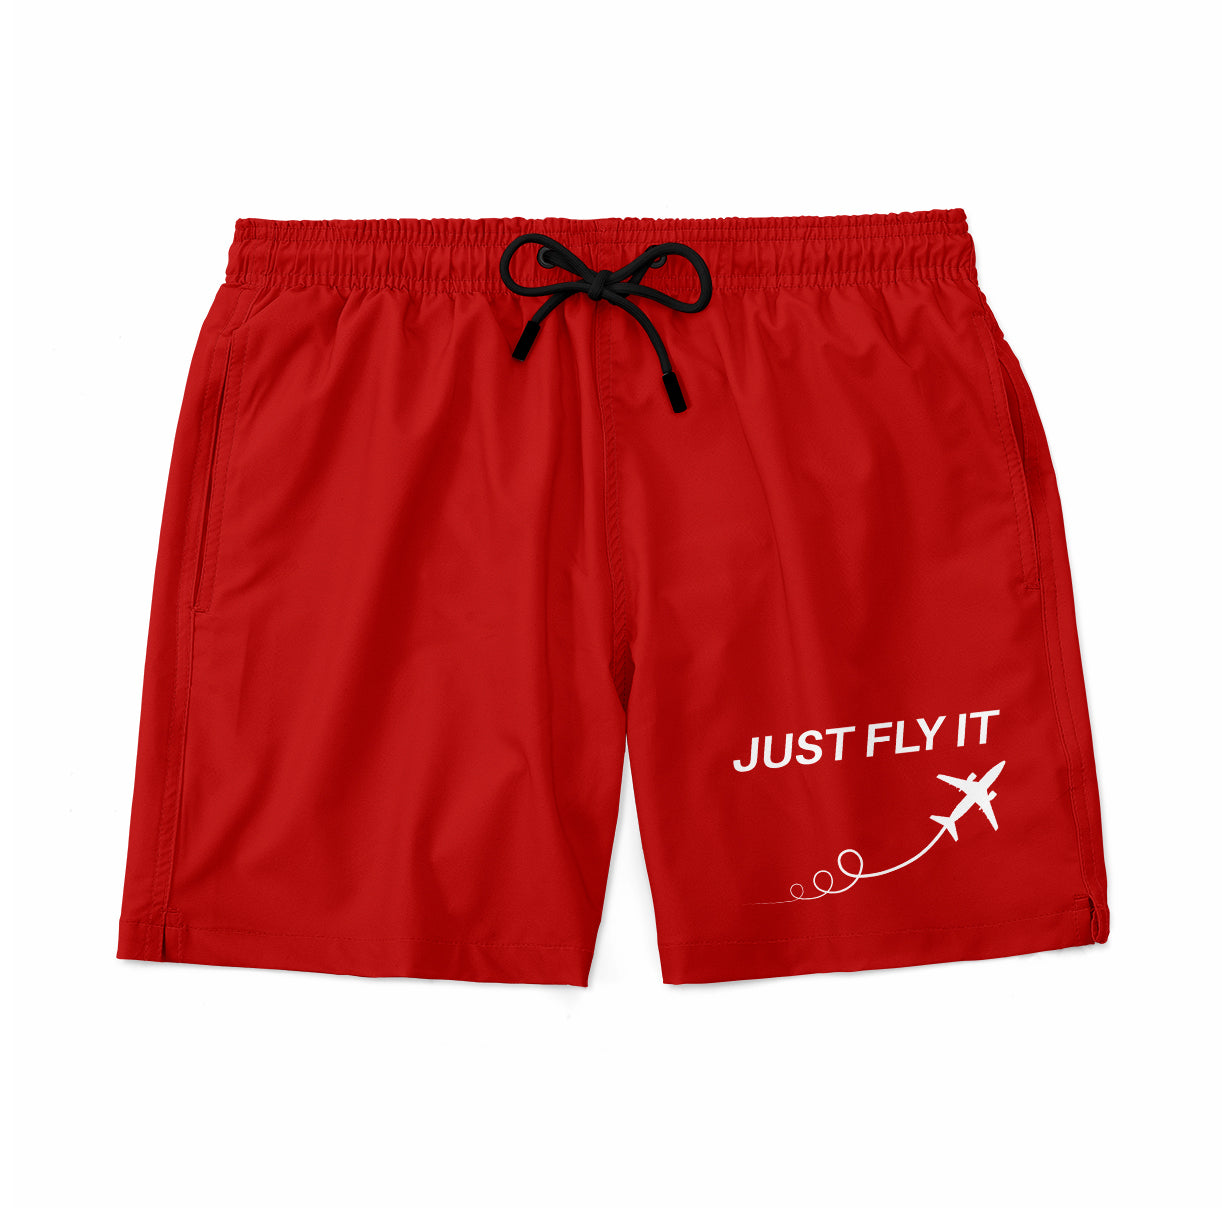 Just Fly It Designed Swim Trunks & Shorts